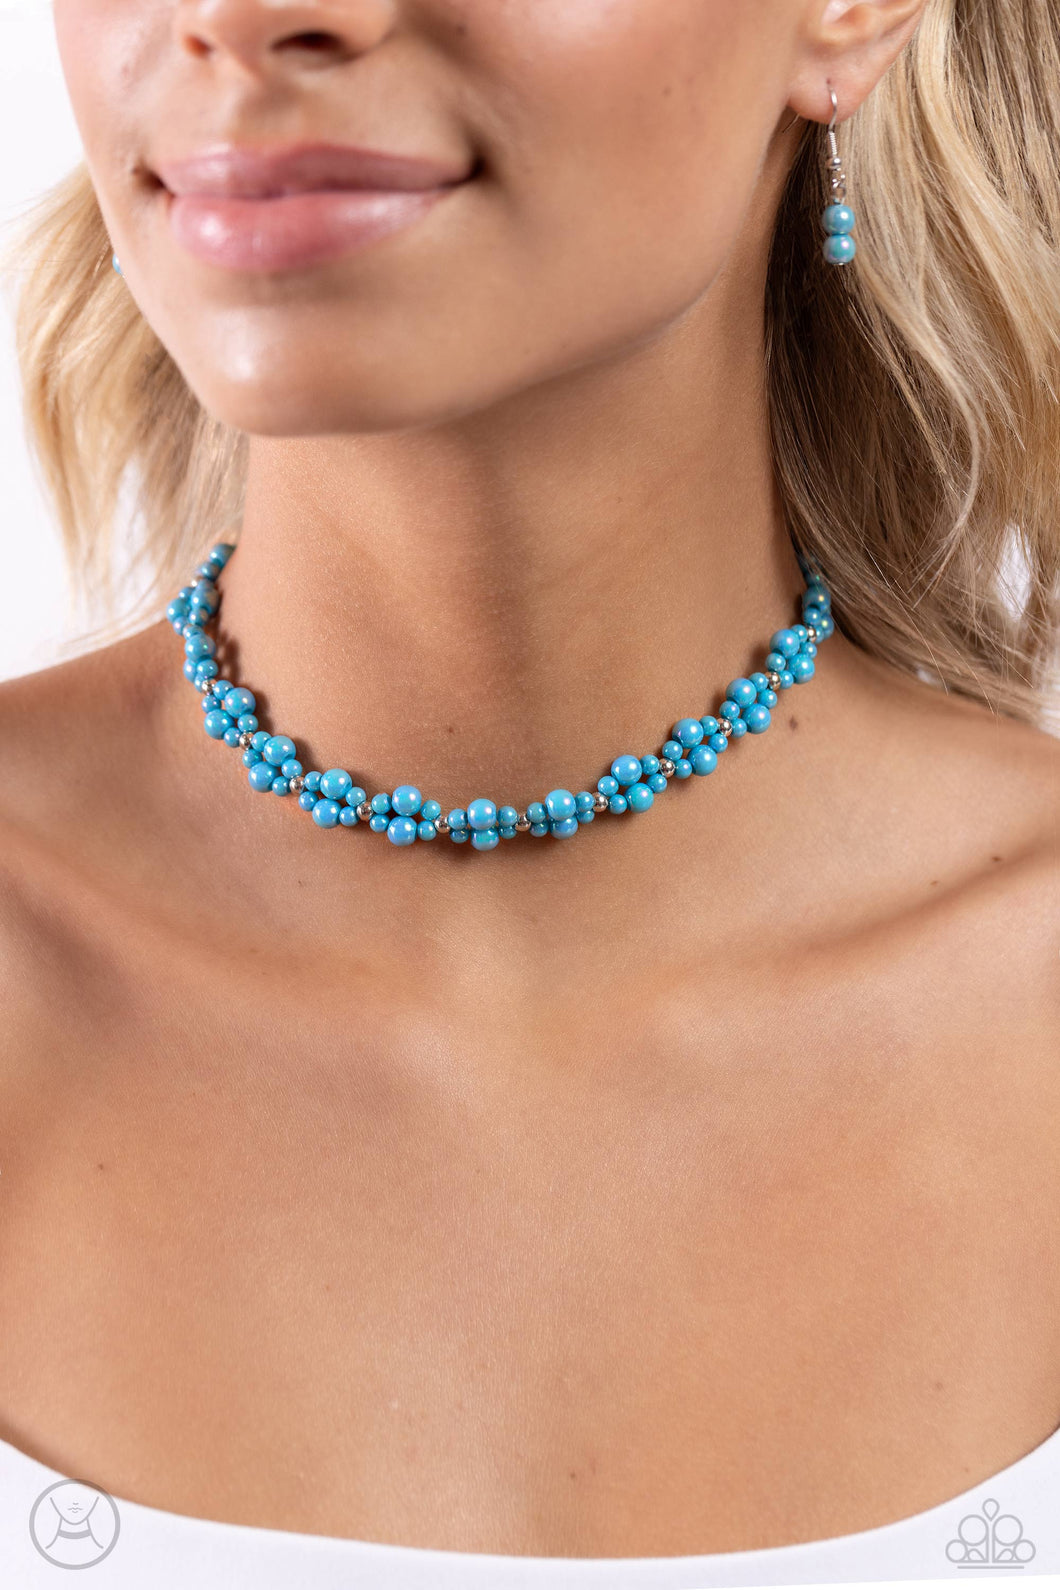 Paparazzi “Dreamy Duchess” Blue Choker Necklace Earring Set